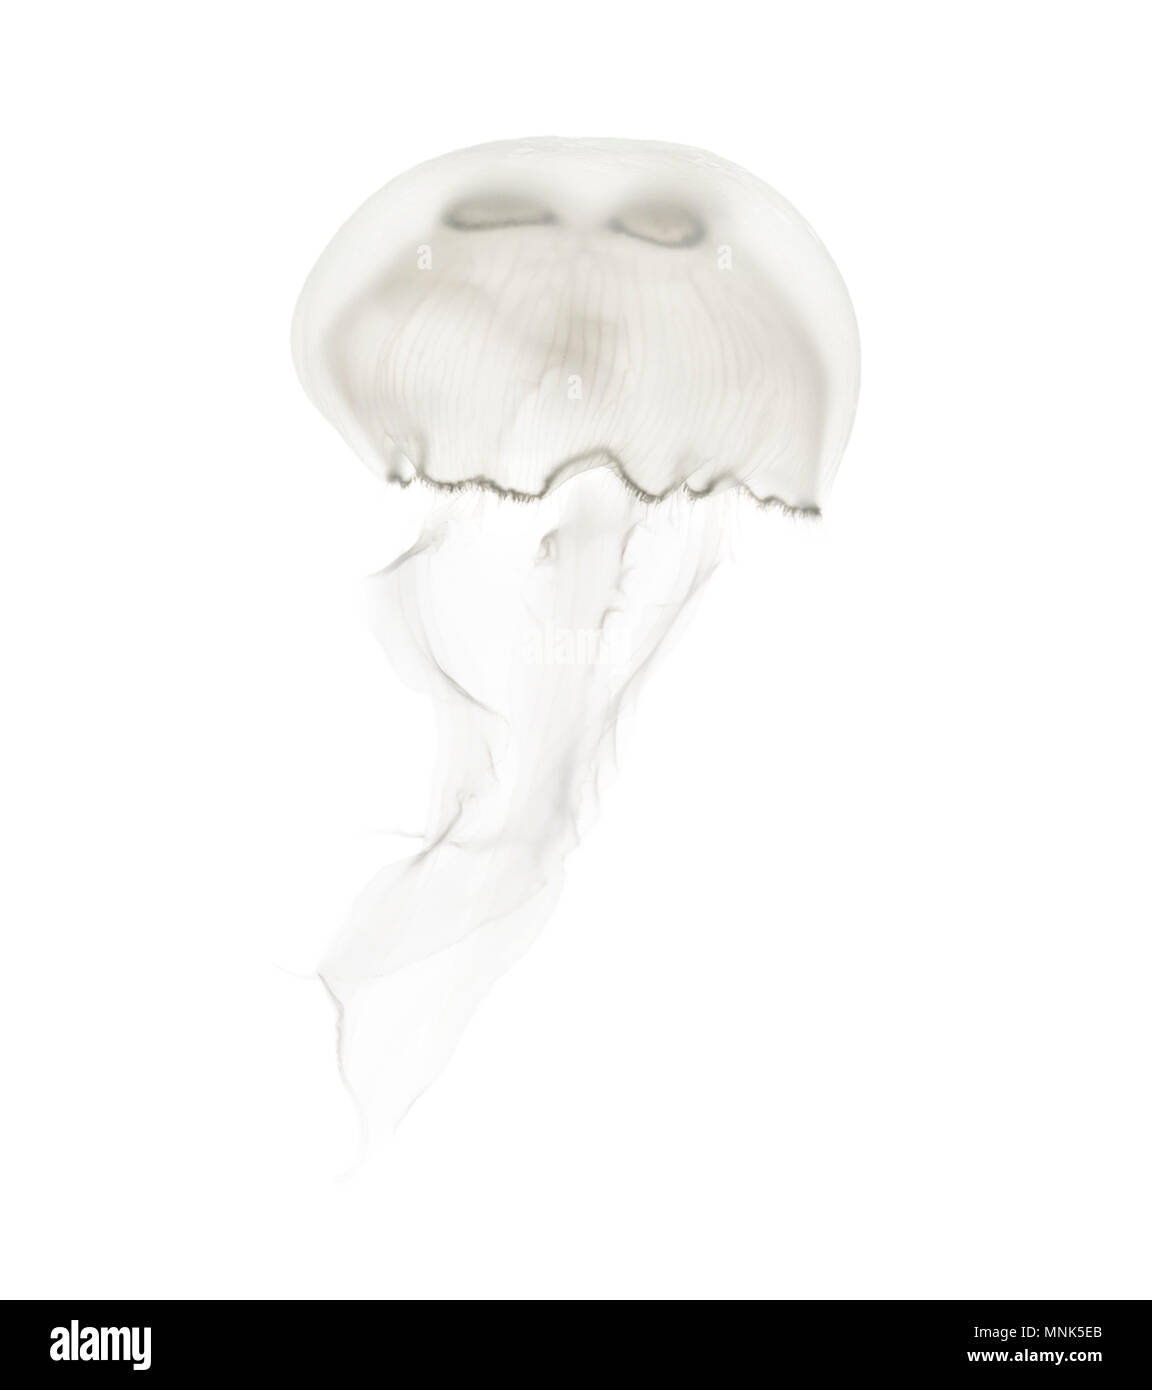 Aurelia aurita also called the common jellyfish against white background Stock Photo